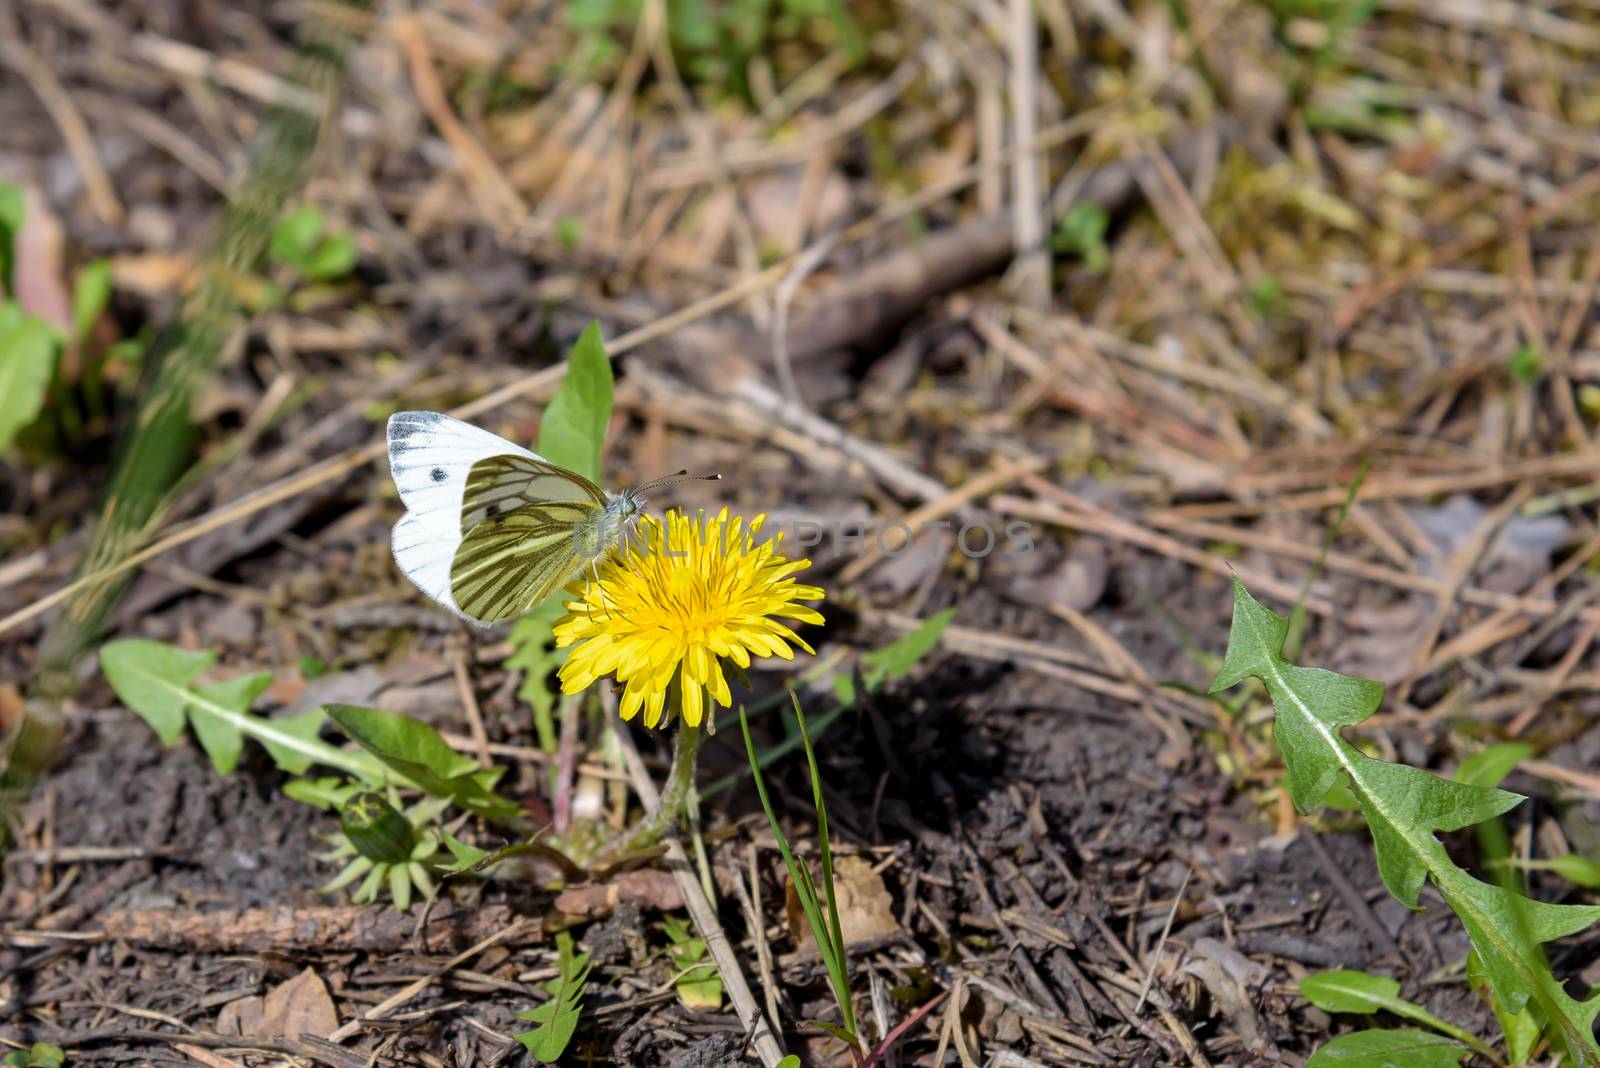 Butterfly on flowerhead of field milk thistle by mkos83